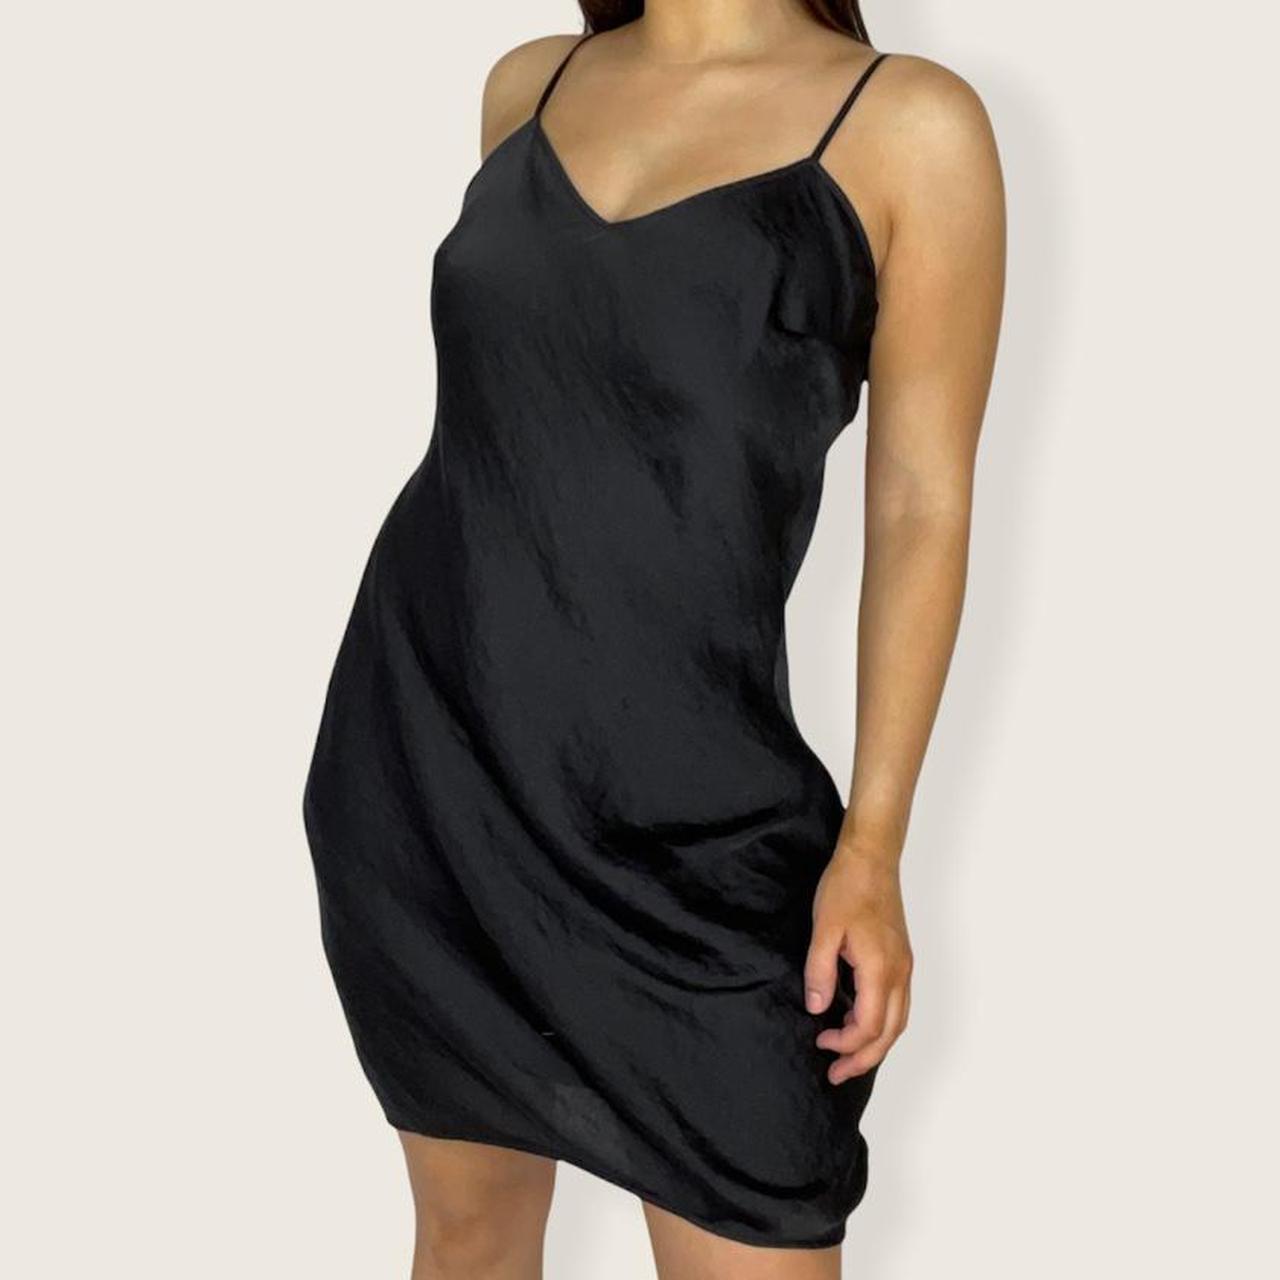 Product Image 1 - Black slip dress 🥀

Michael Kors